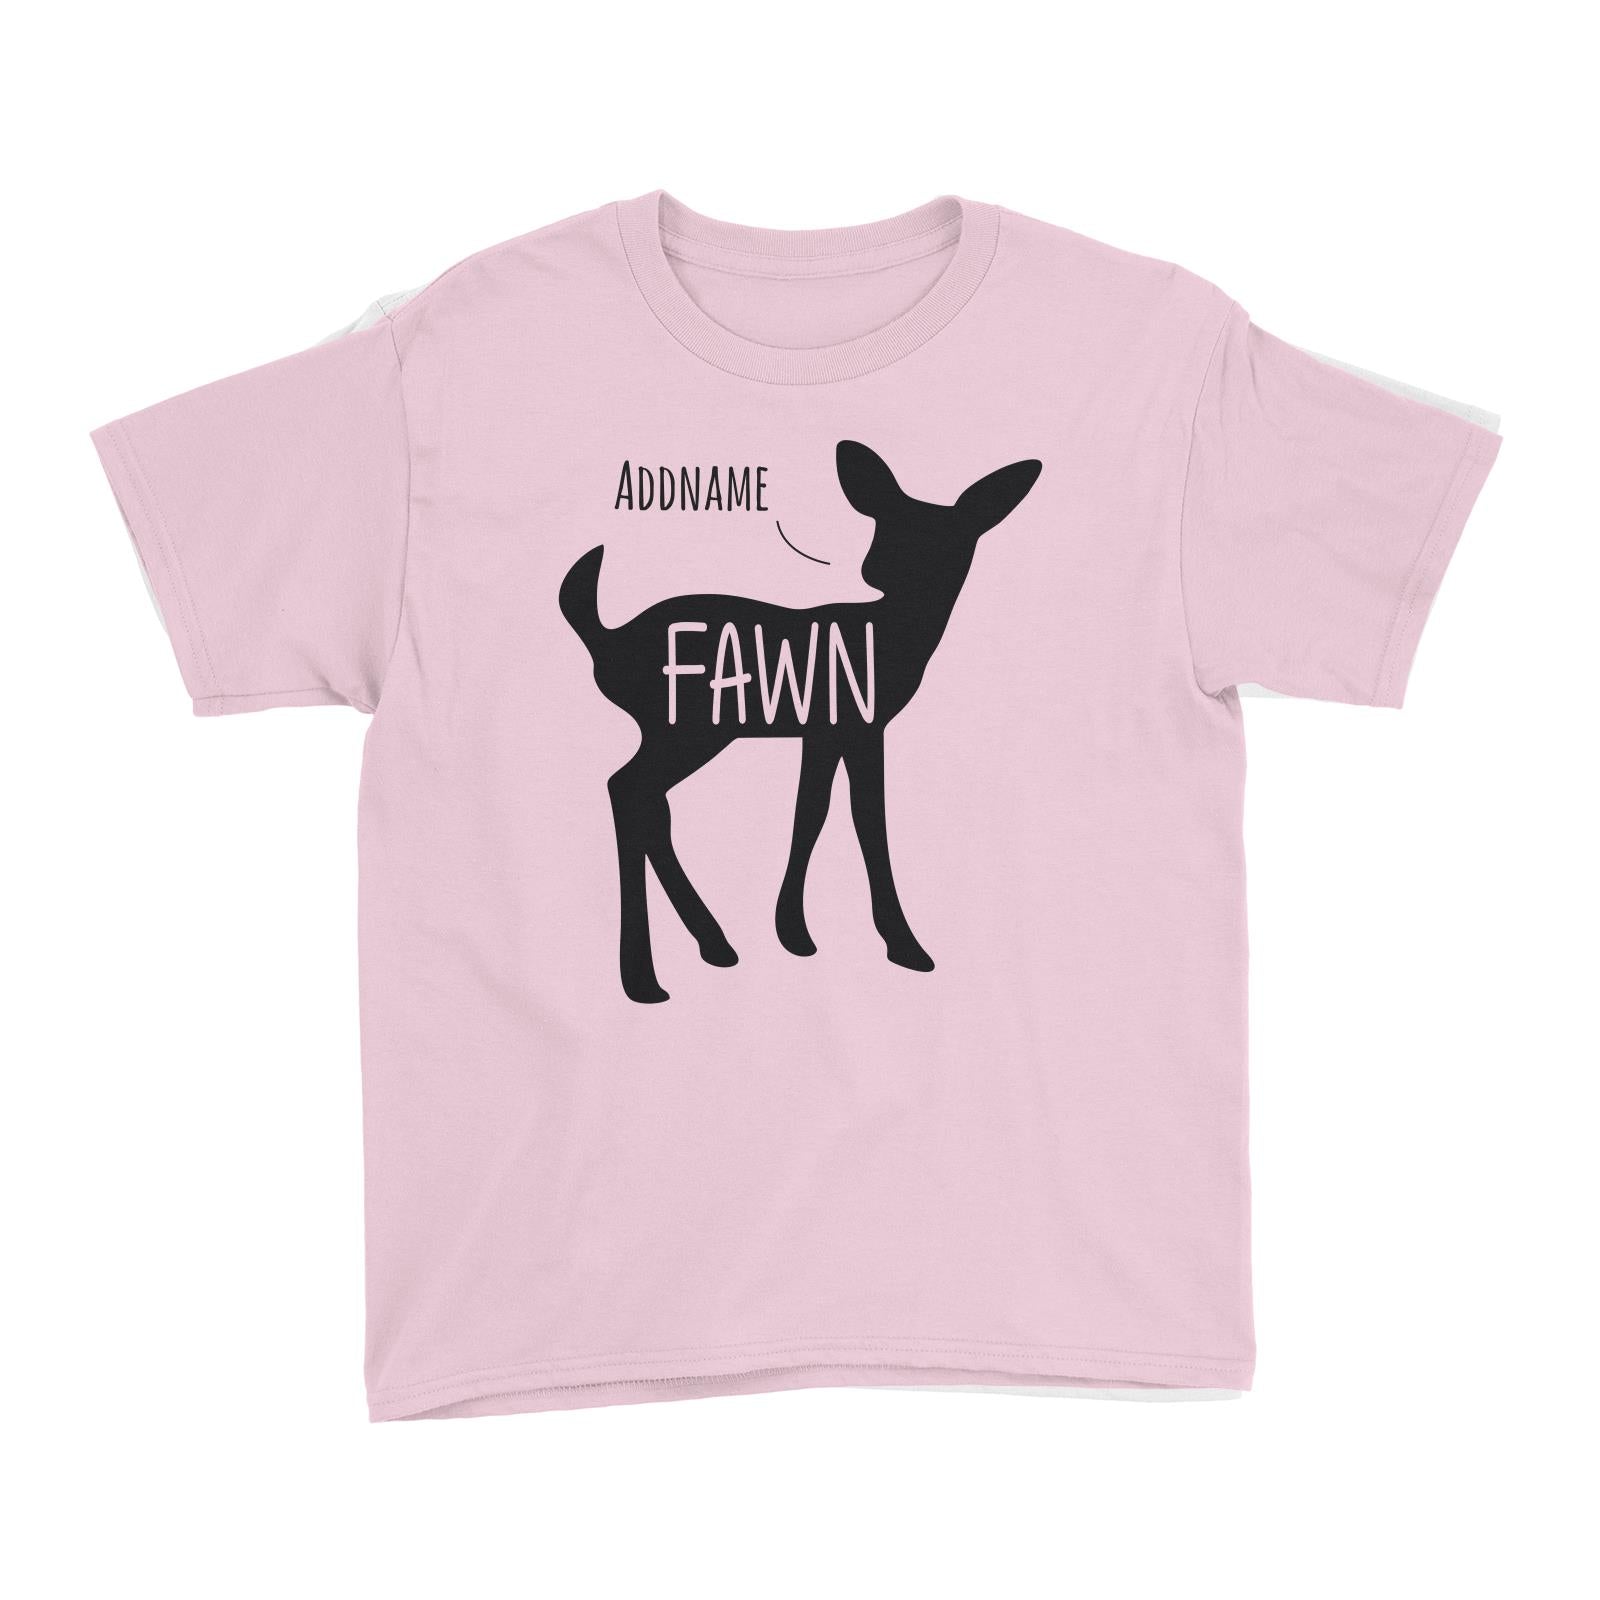 Fawn Kid's T-Shirt